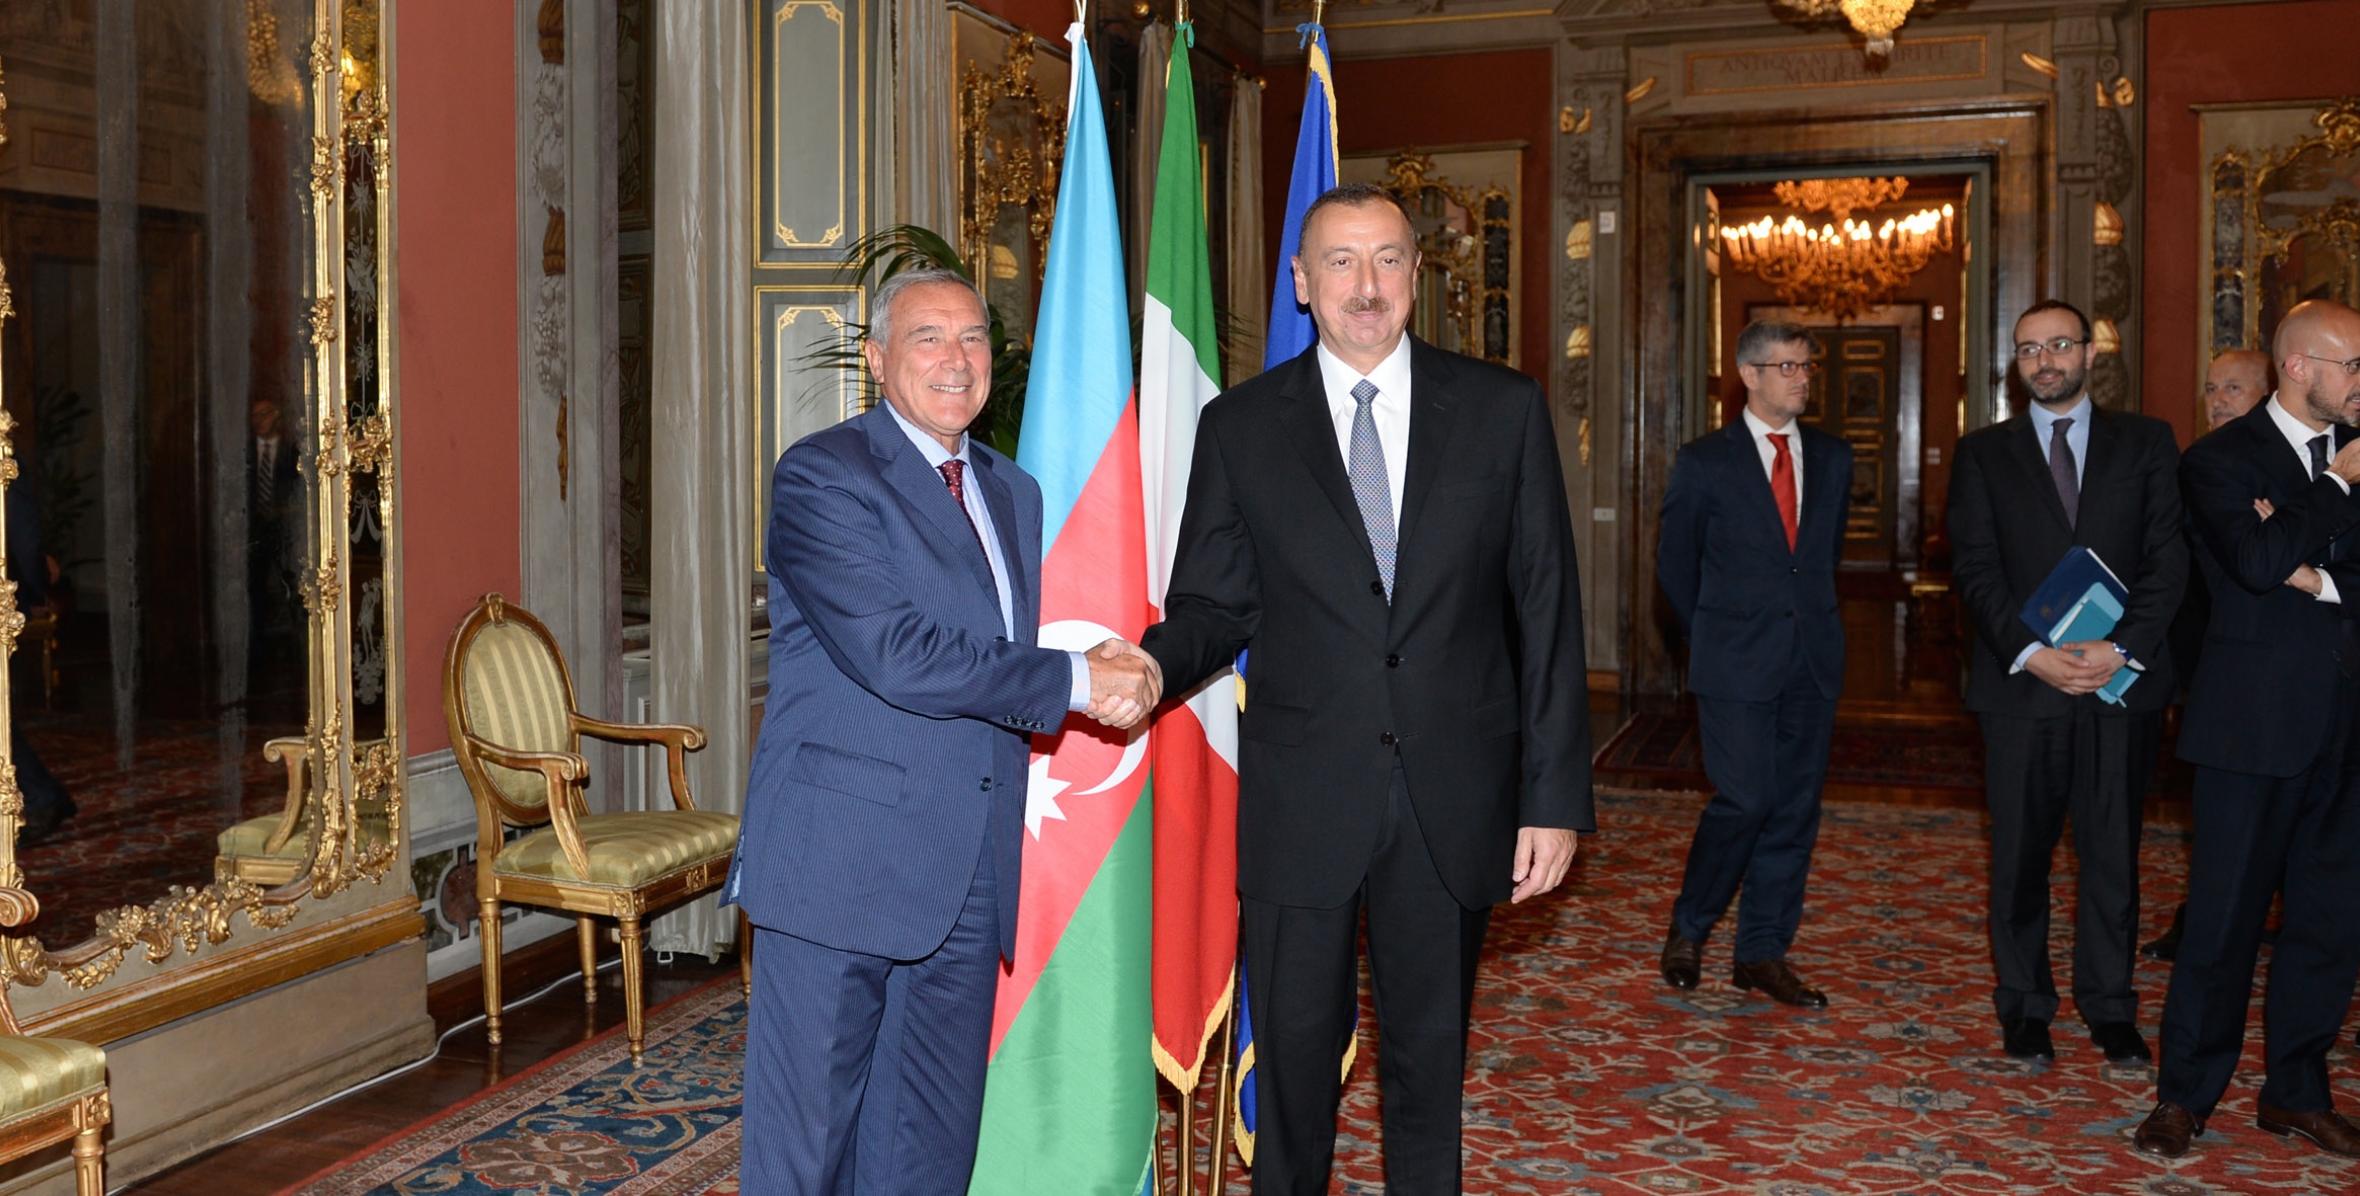 Ilham Aliyev met with President of the Italian Senate Pietro Grasso in Rome